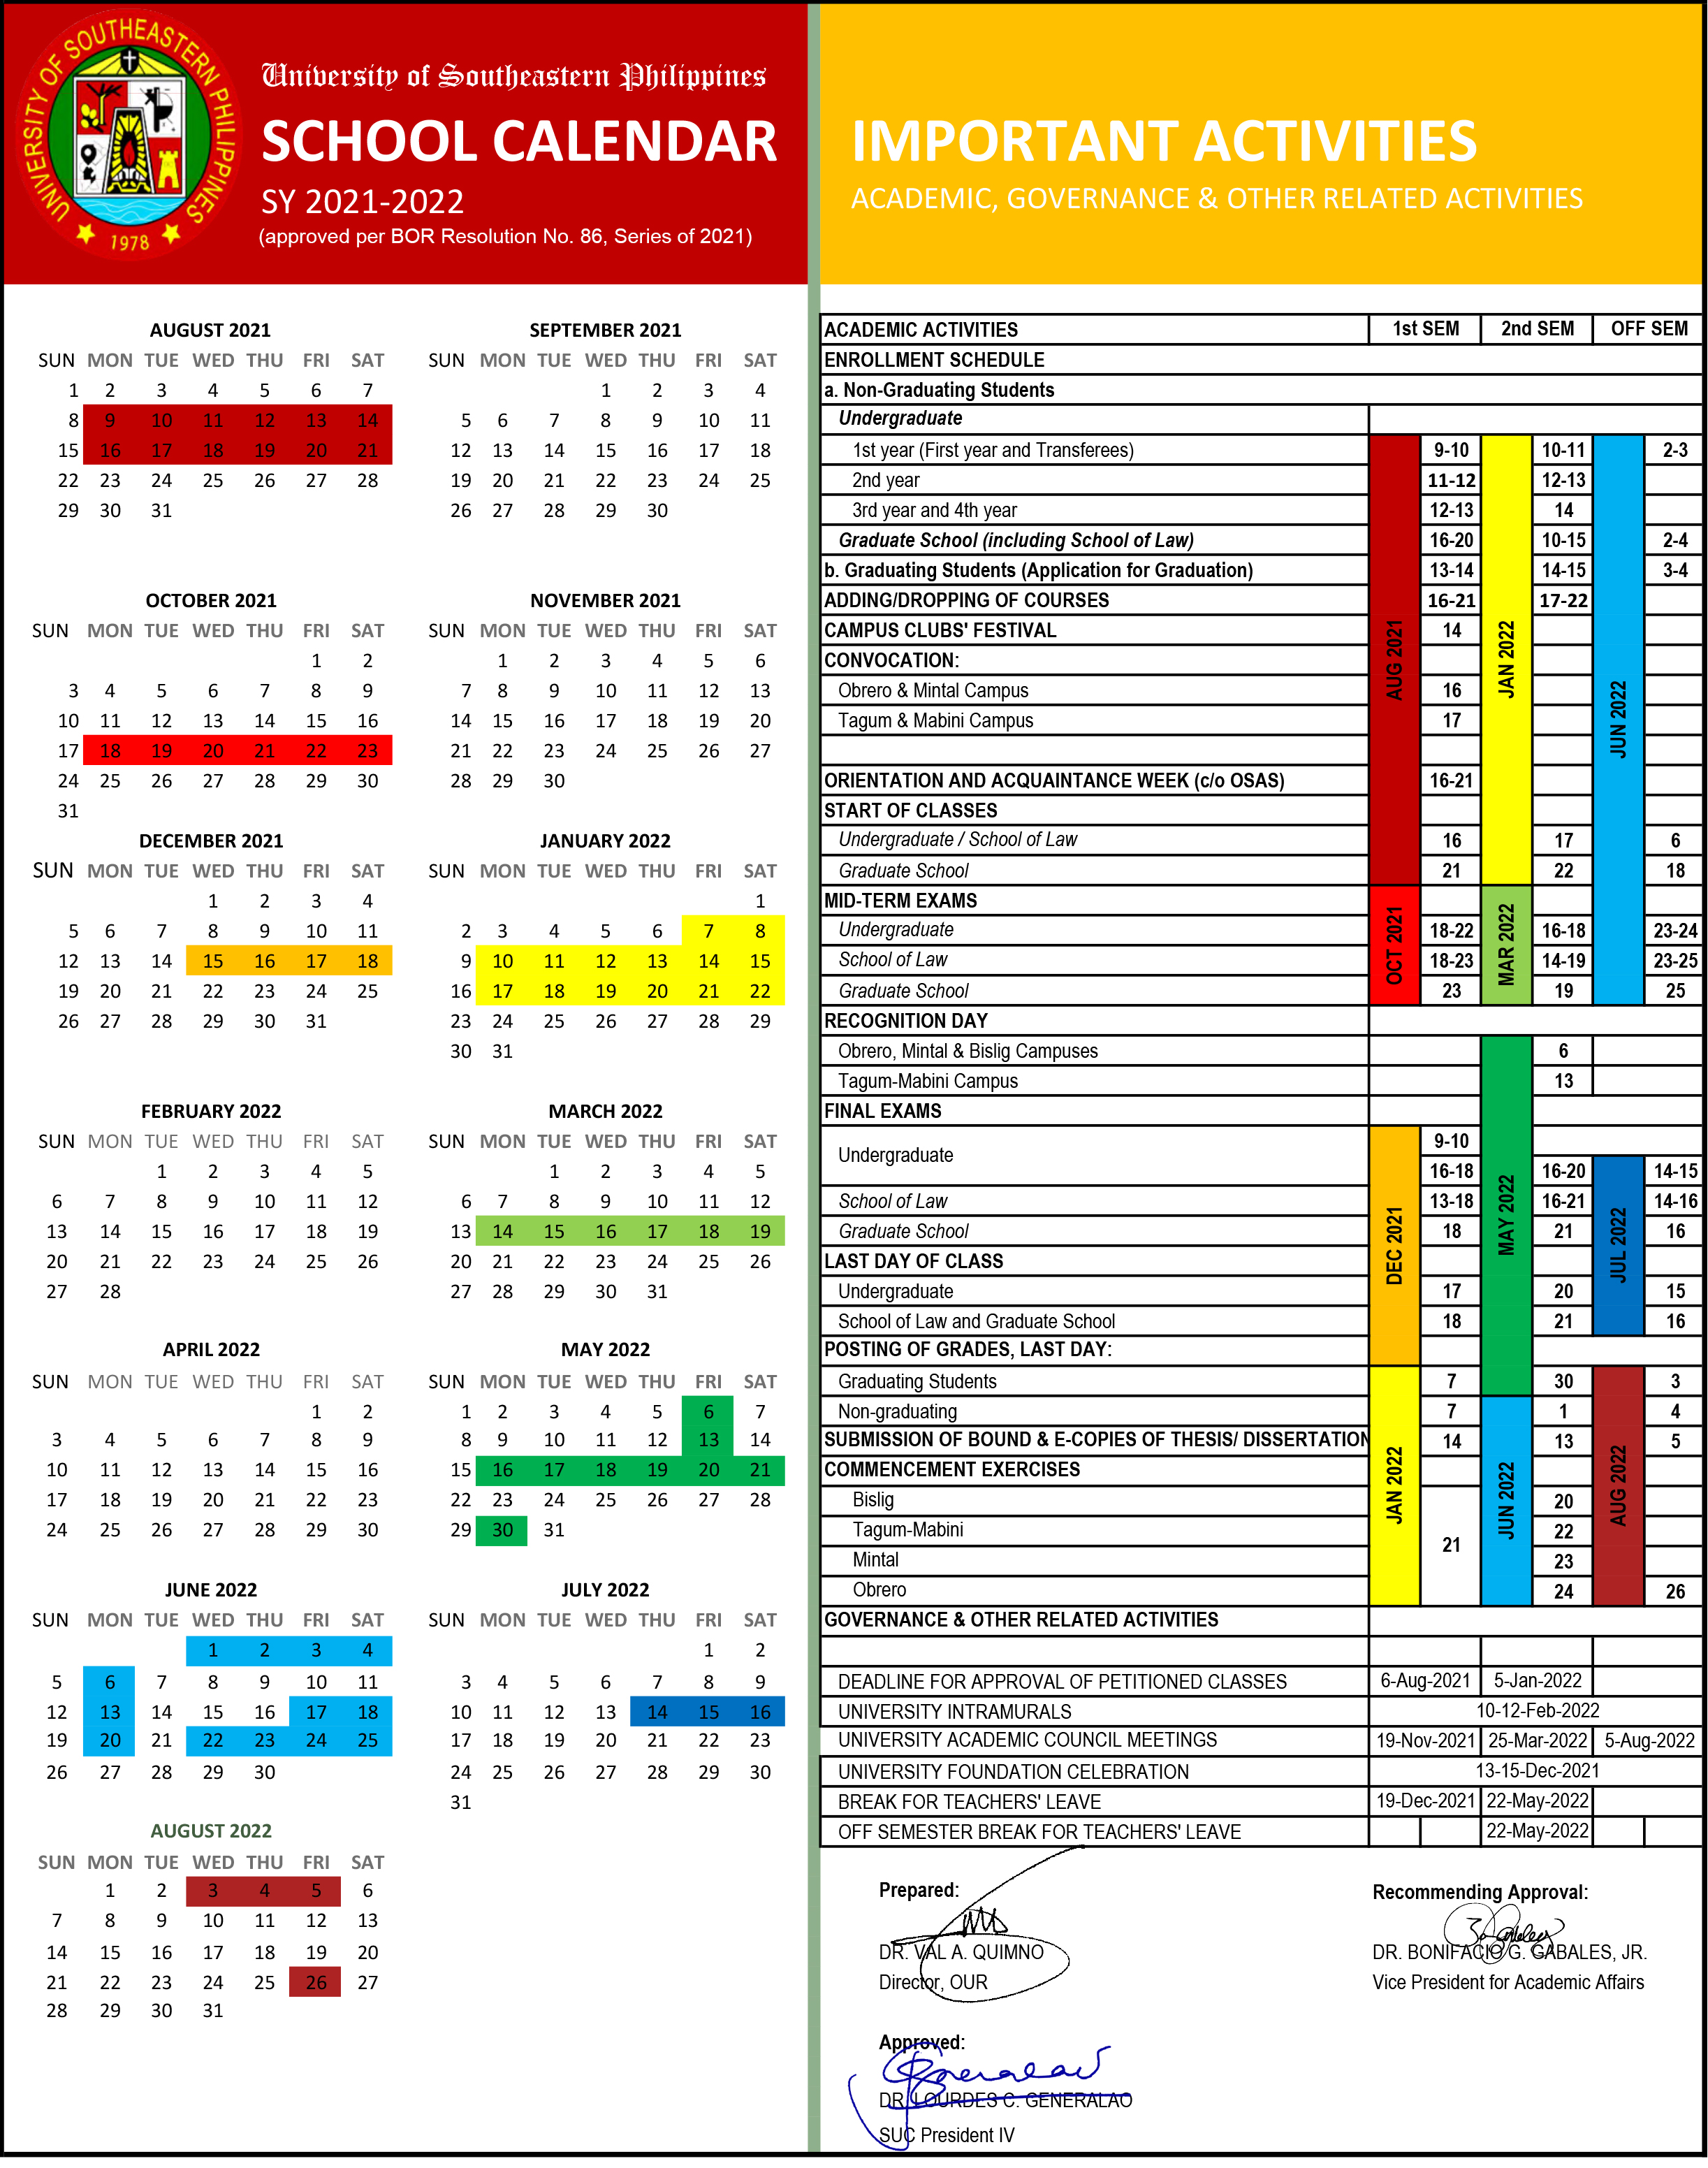 USeP School Calendar SY 2021 - 2022 - University of Southeastern